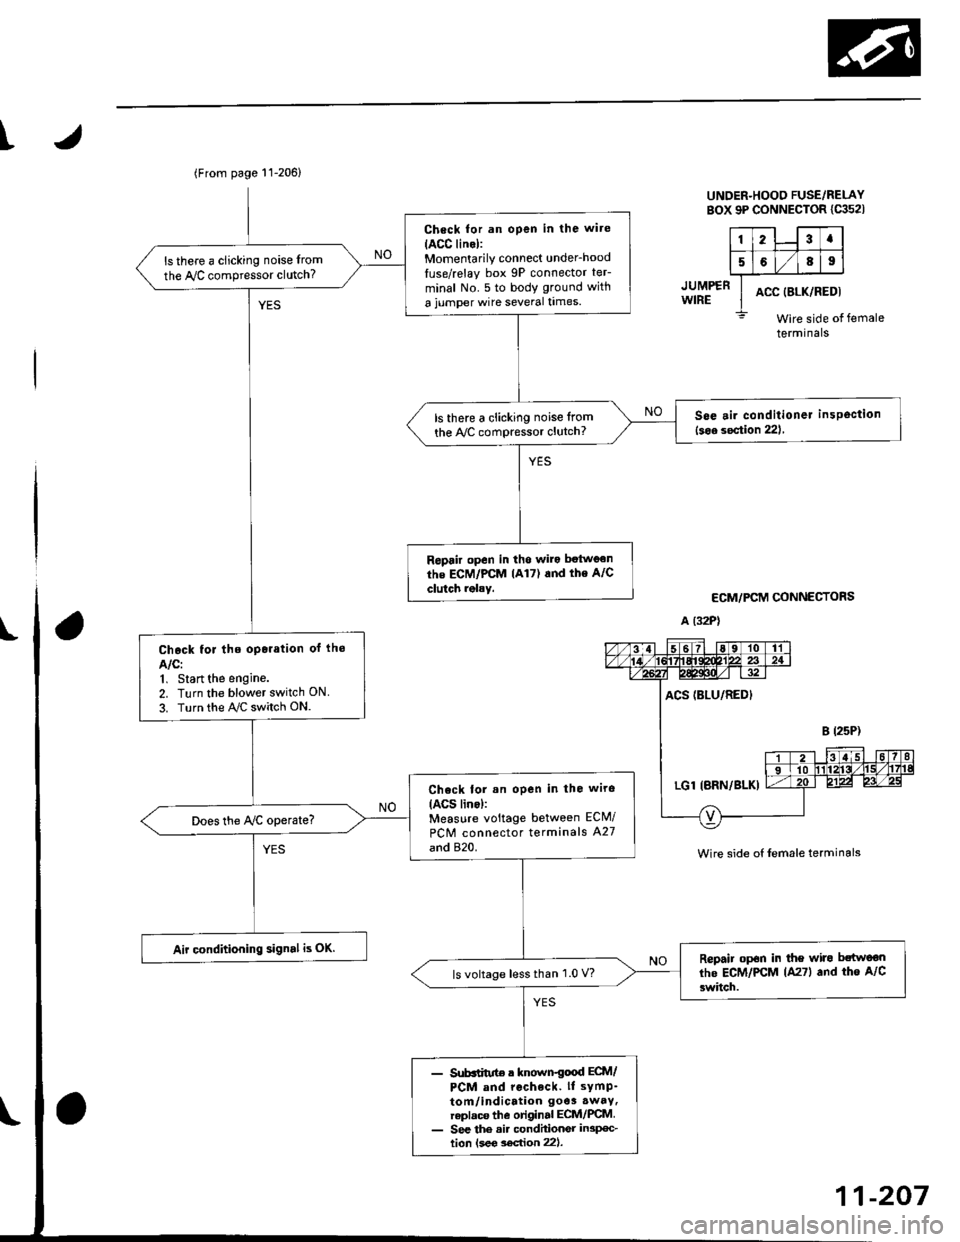 HONDA CIVIC 1998 6.G Workshop Manual I
JUMP€RWIRE
UNDER-HOOO FUSE/RELAYsox 9P coNNEcroR lca52l
123a
5689
ACC (8LK/REDI
Wire side ofterminals
ECM/PCM CONNECTORS
A (32P1
female
Wire side of {emale terminals
(From page 11-206)
Check for a